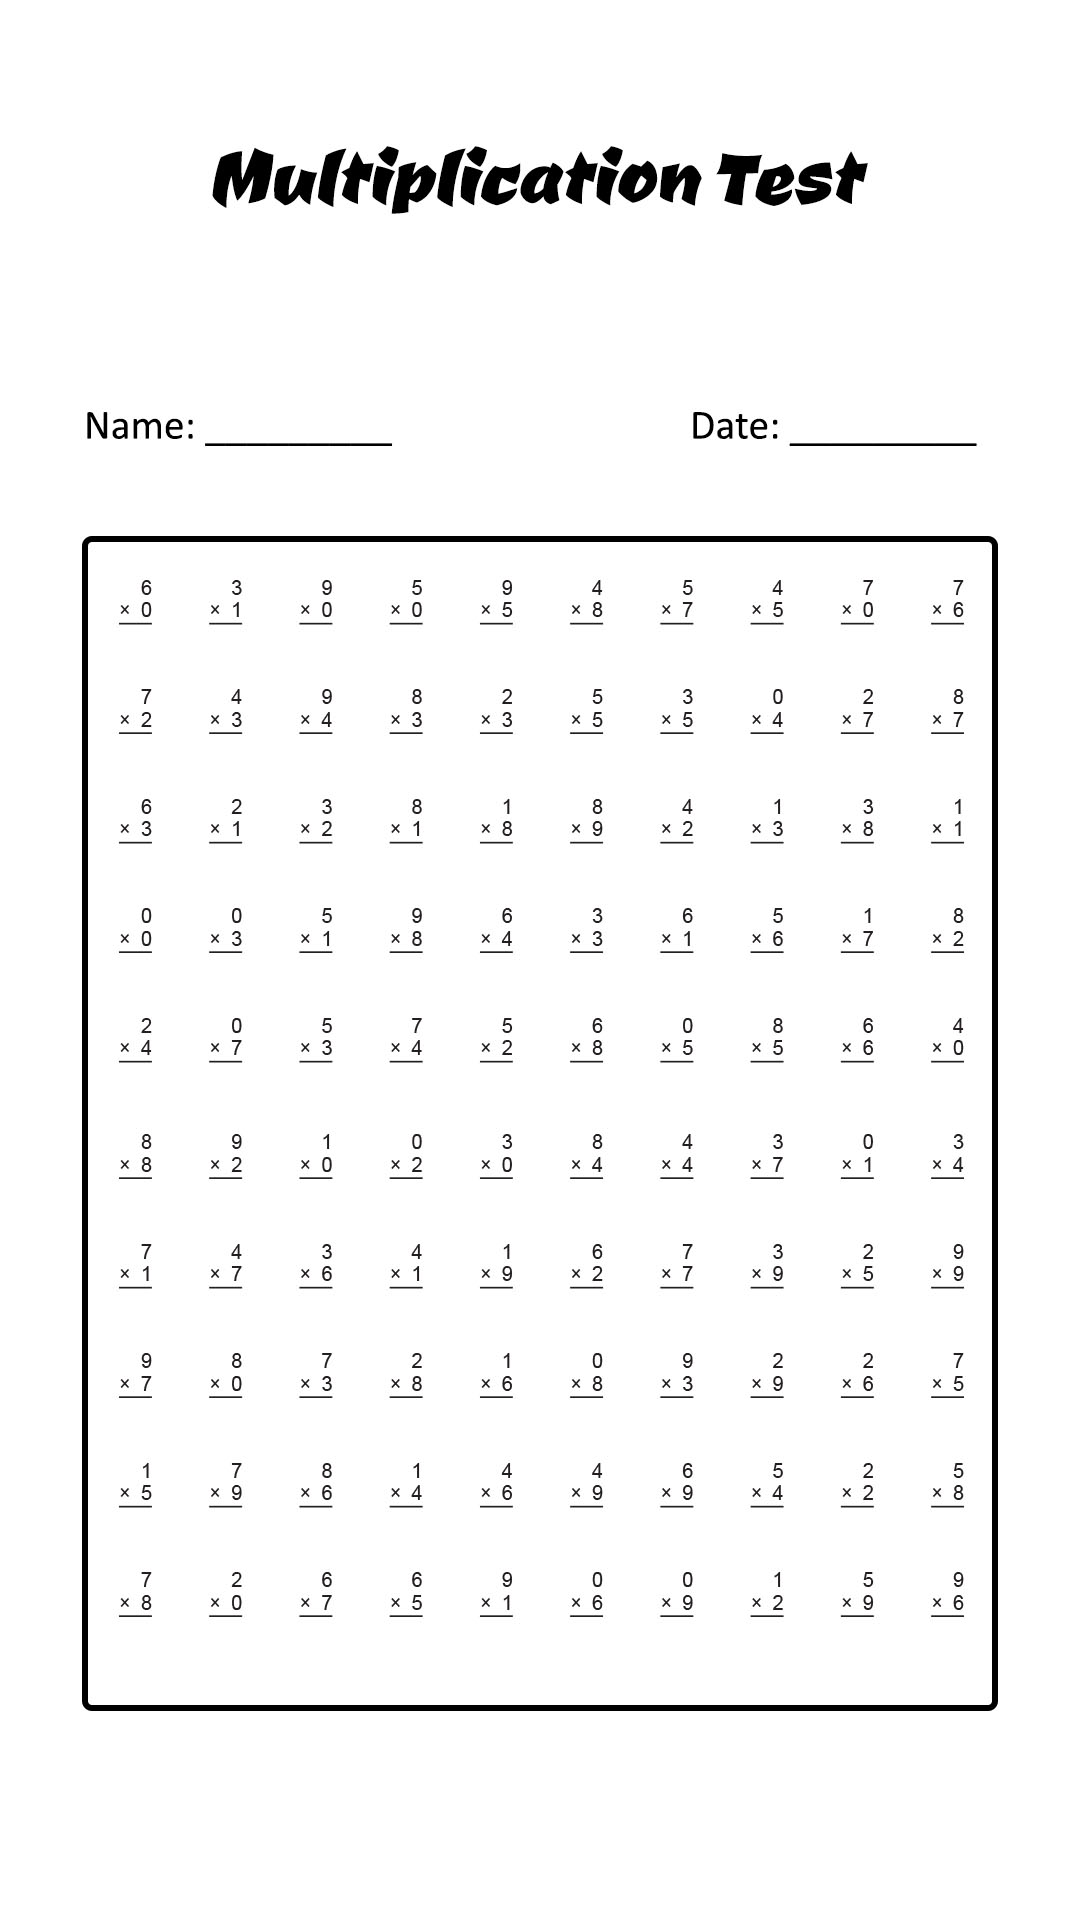 timed-multiplication-test-printable-printable-templates